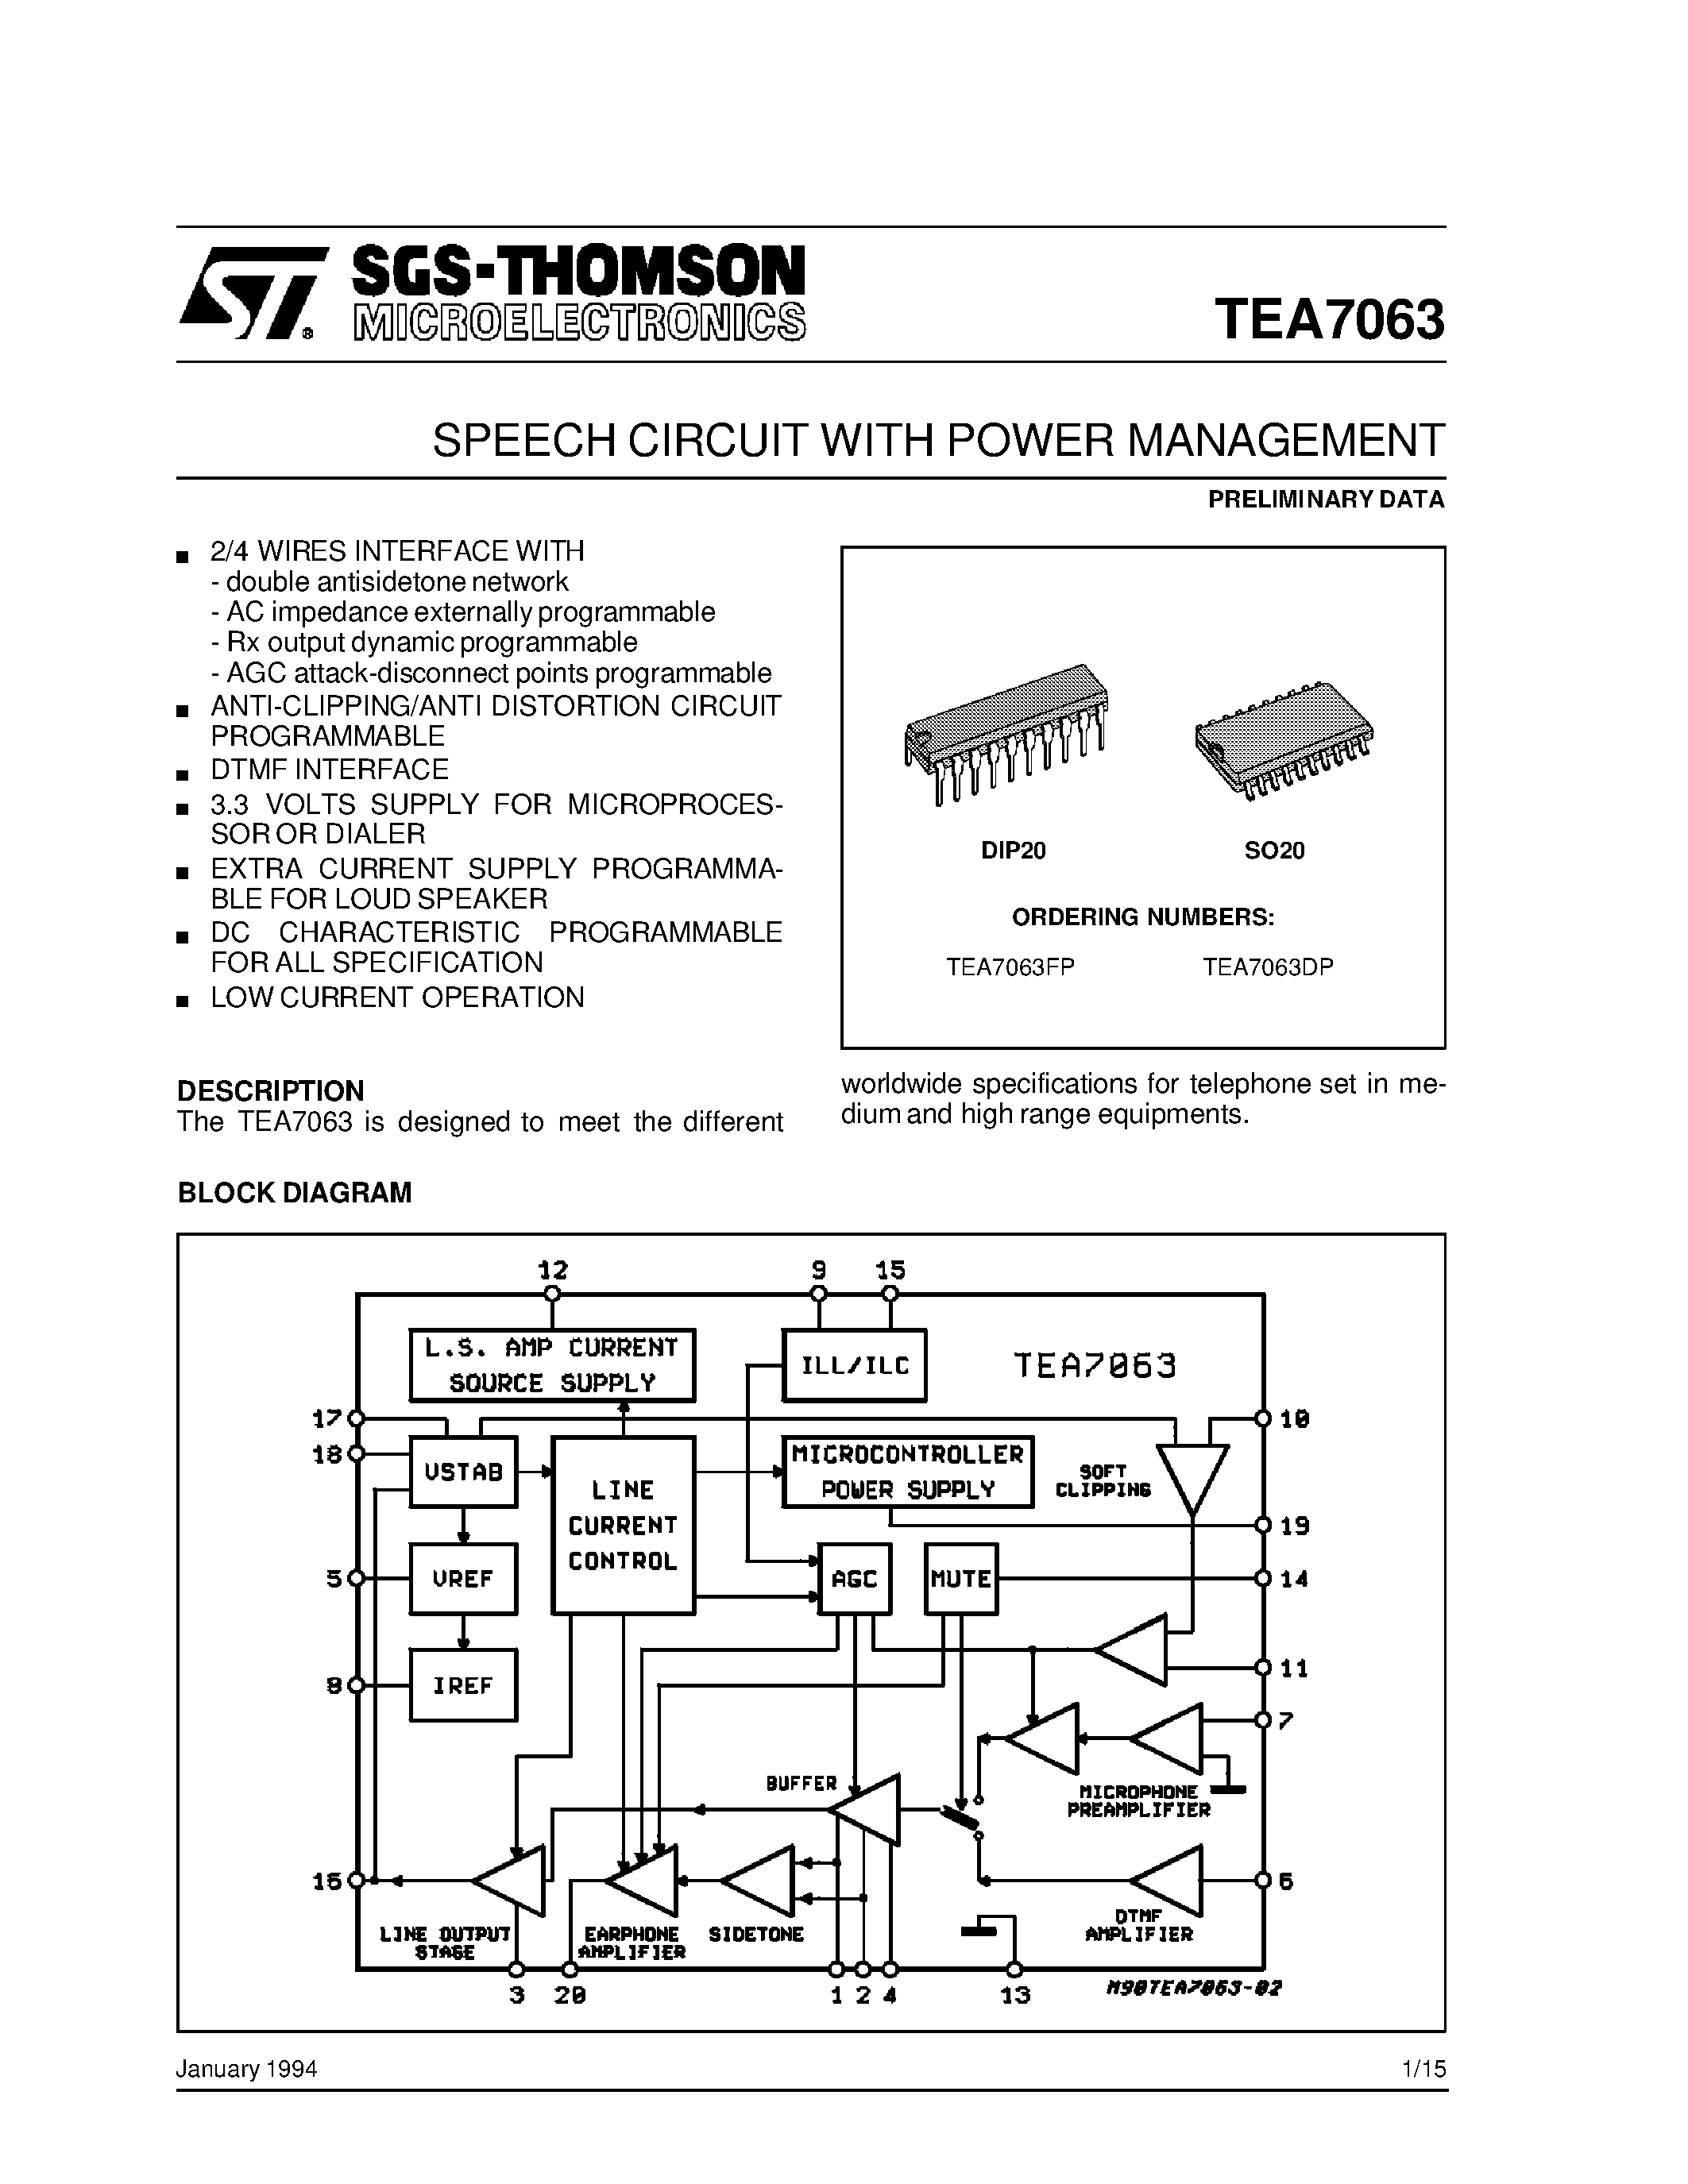 Datasheet TEA7063FP - SPEECH CIRCUIT WITH POWER MANAGEMENT page 1